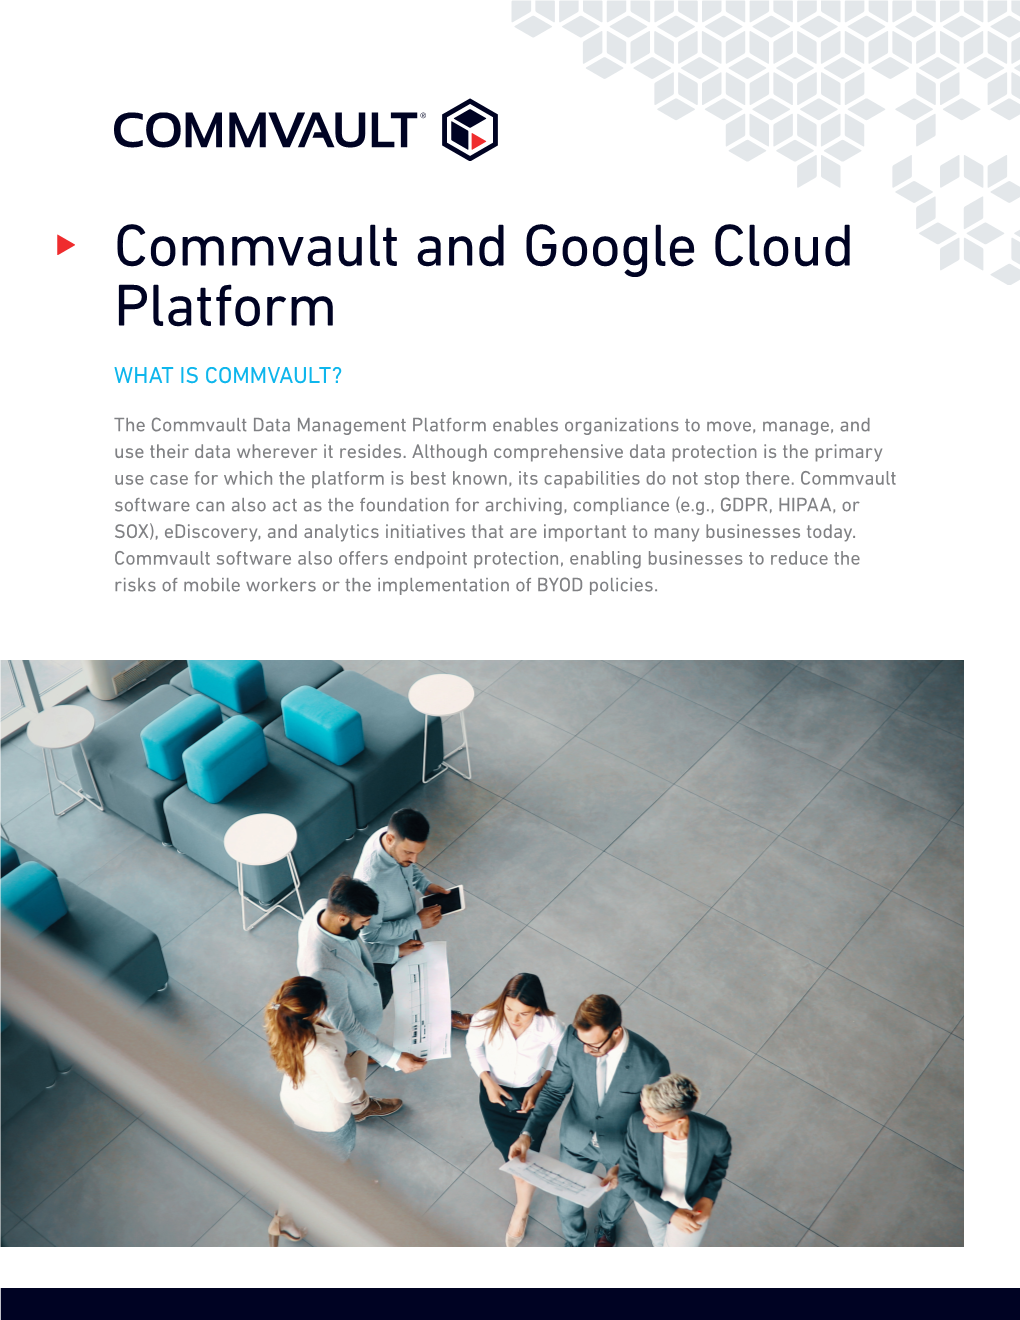 Commvault and Google Cloud Platform